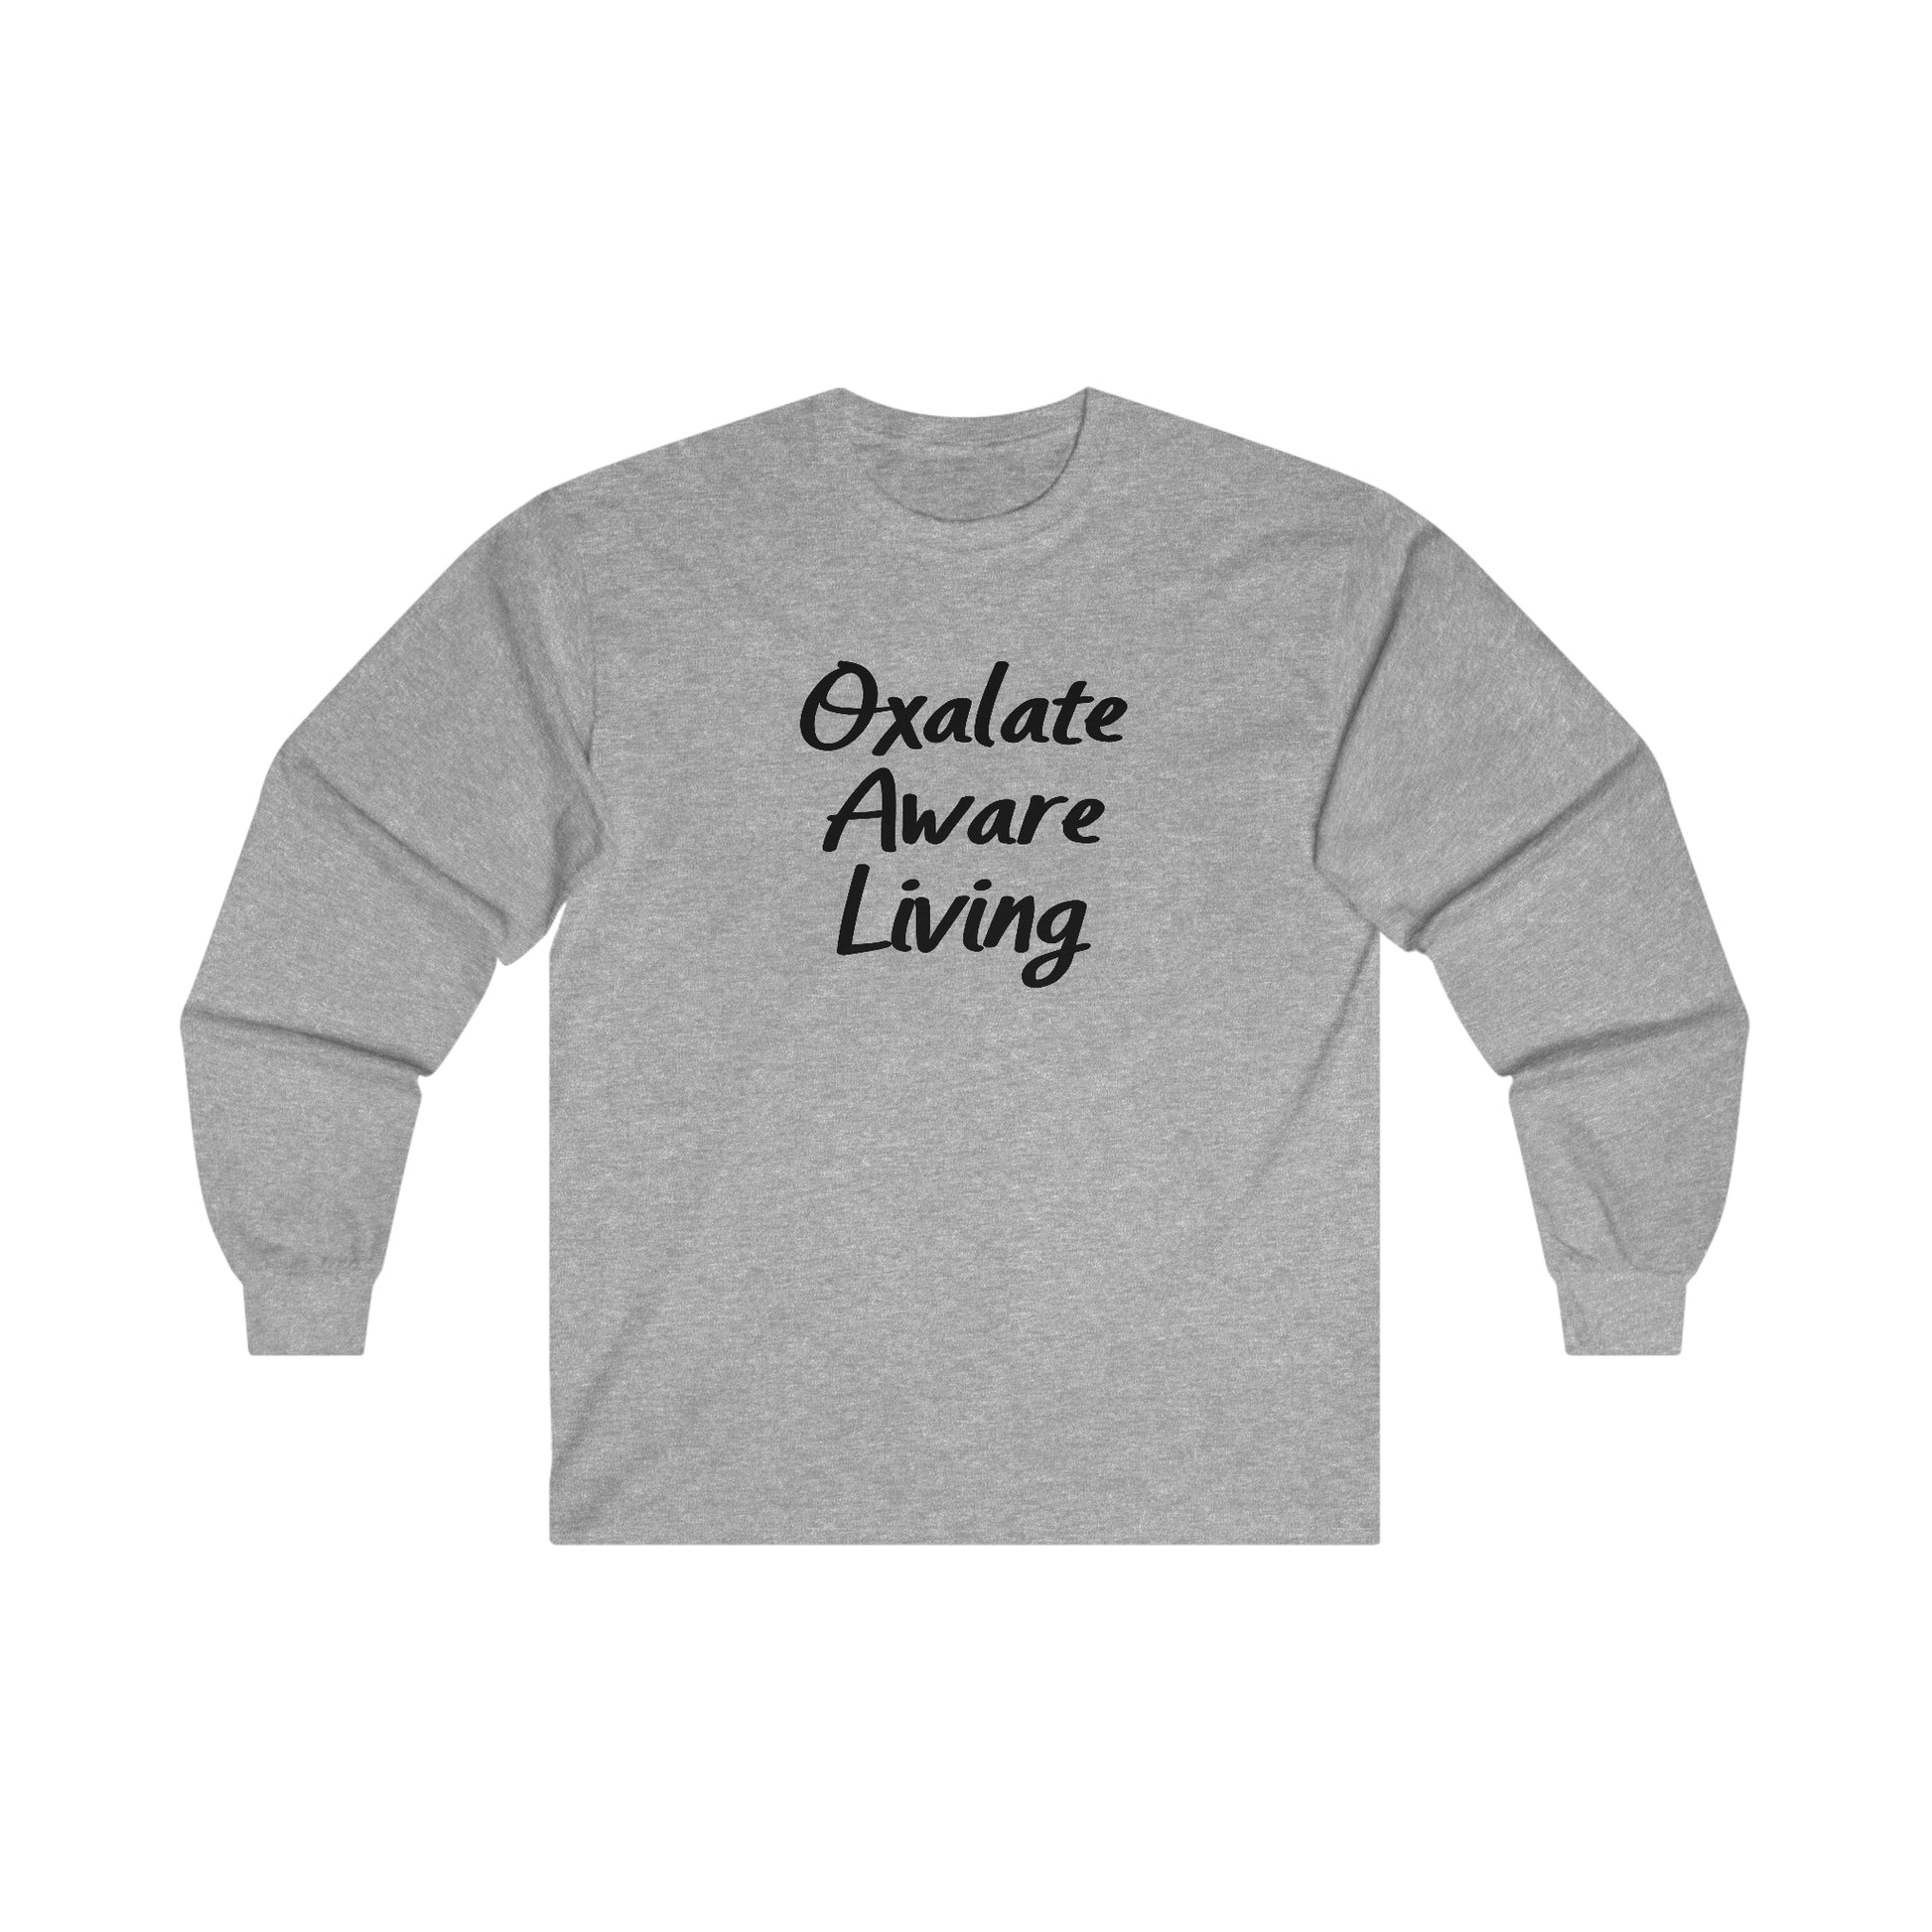 Oxalate Aware Living Superfoods Toxicity Long Sleeve Shirt